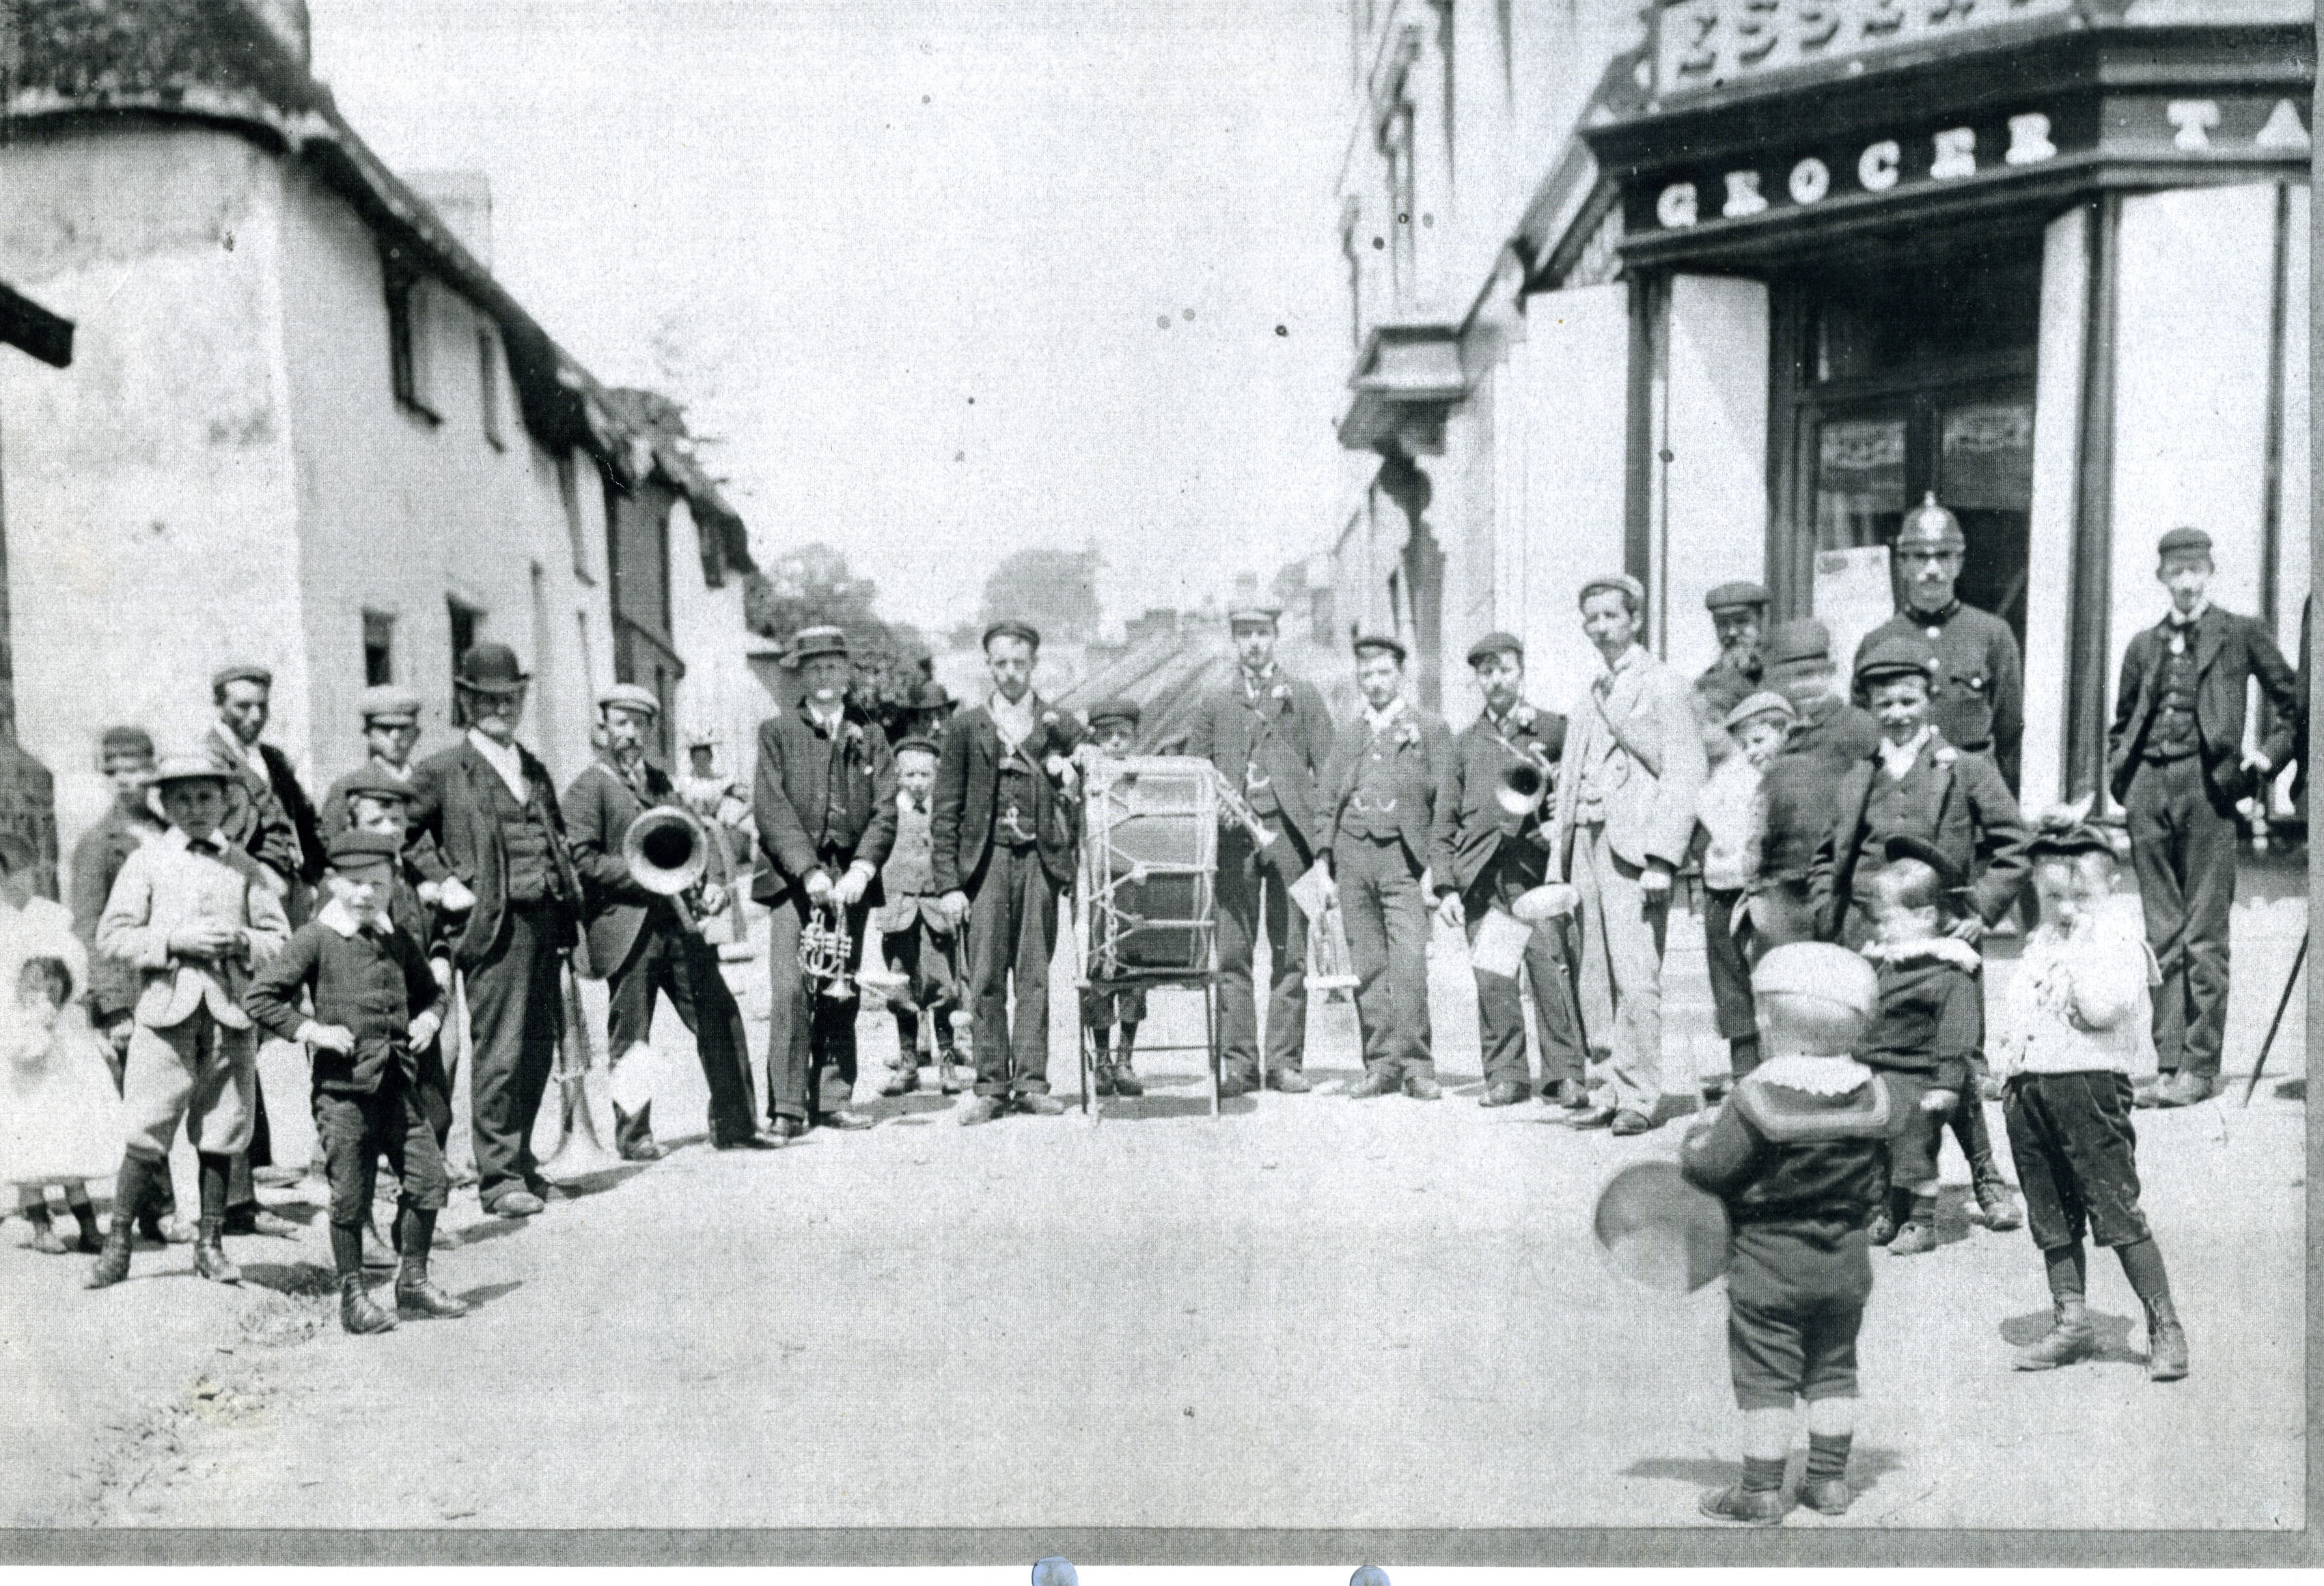 Hatherleigh Band c. 1900